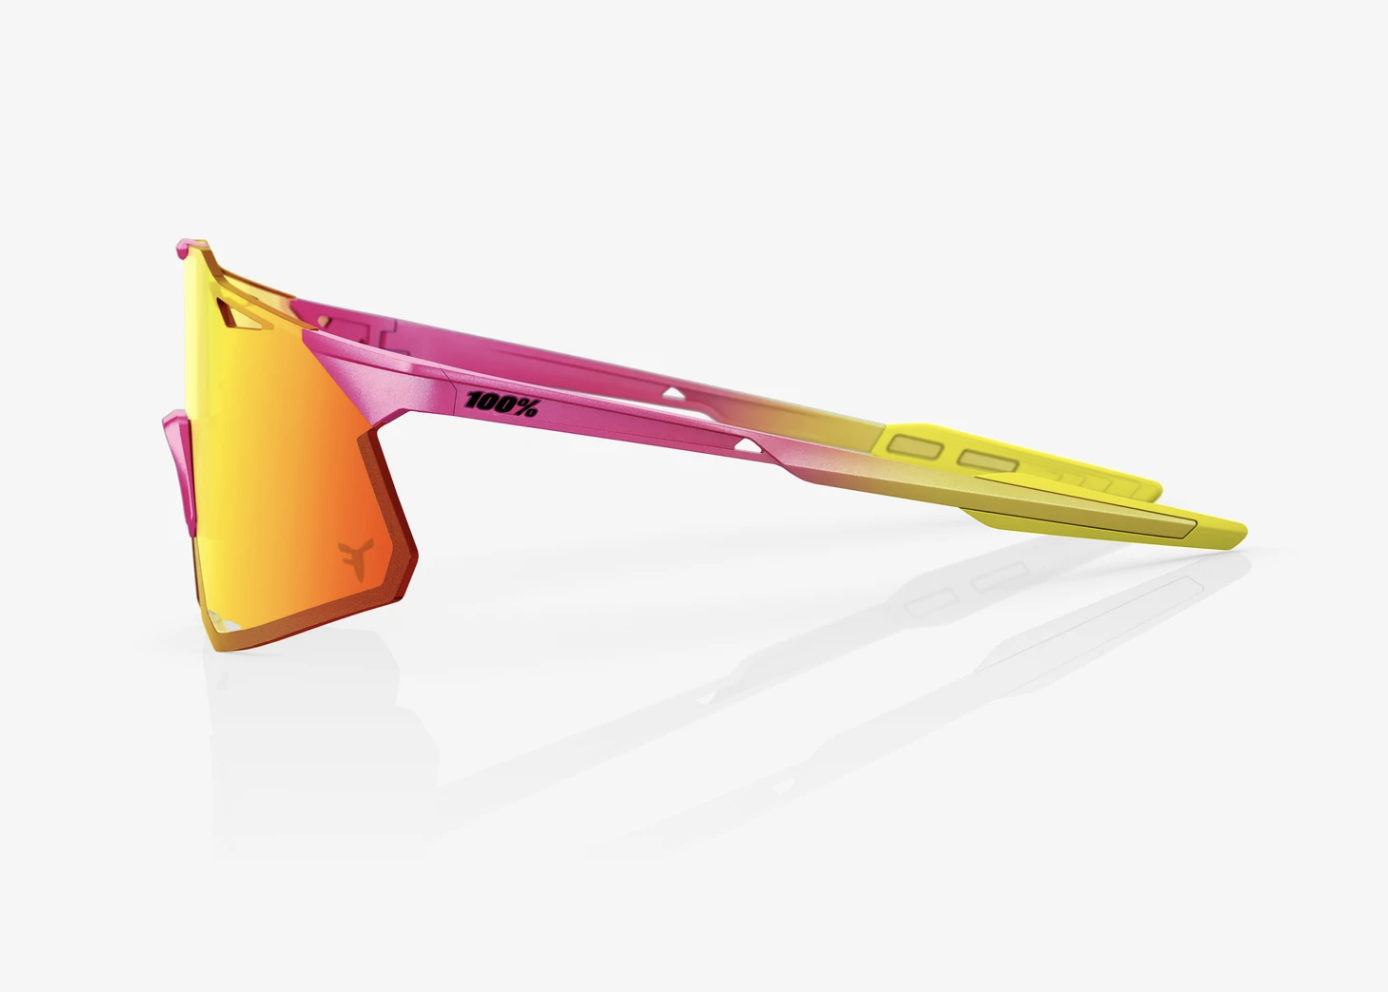 100% Hypercraft Fernando Tatis Jr Special Edition Colorway Metallic Pink Fading to Yellow